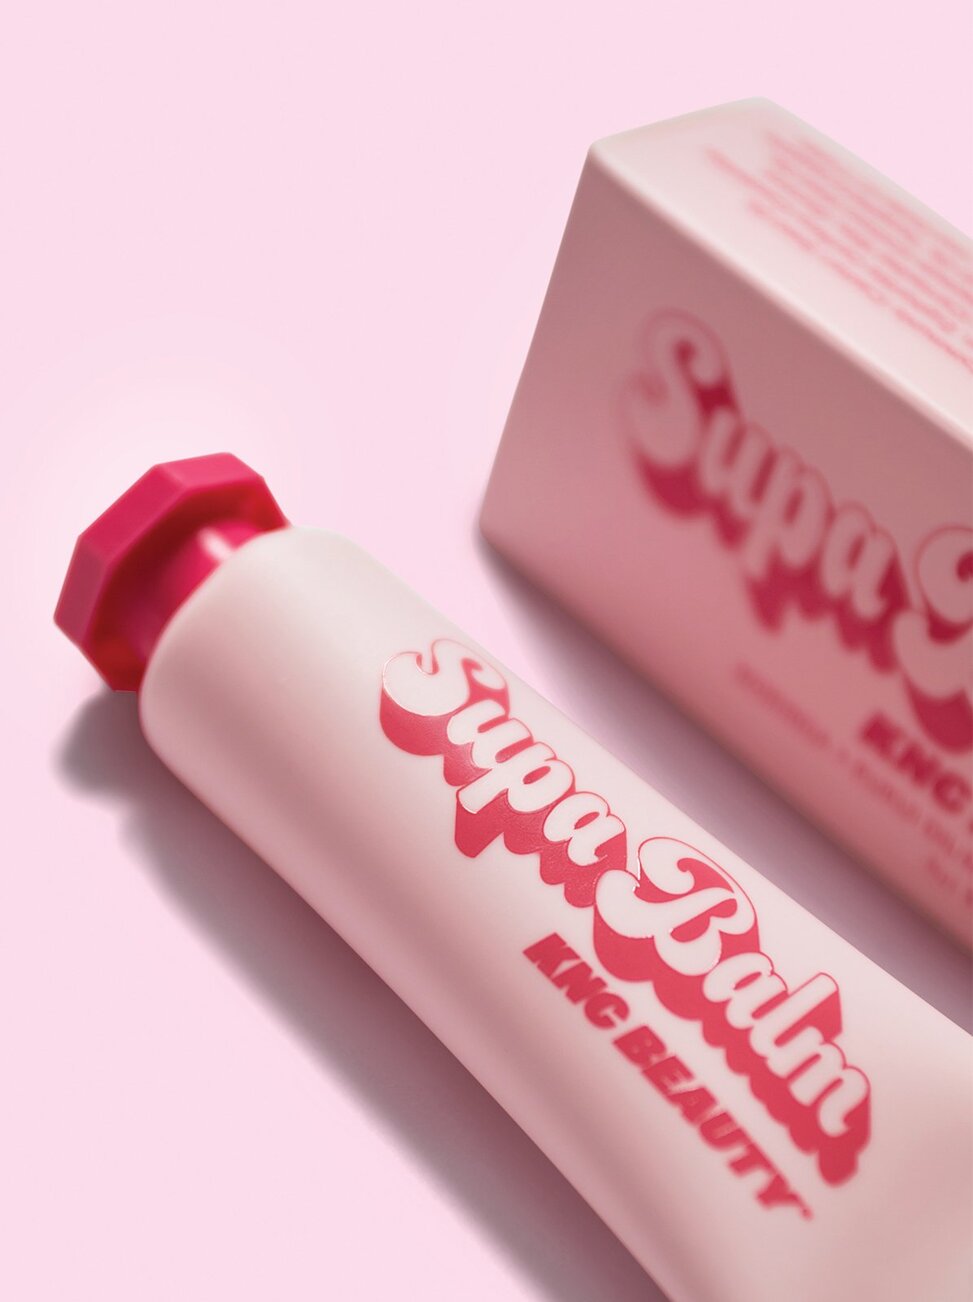 tube of SupaBalm on pink background